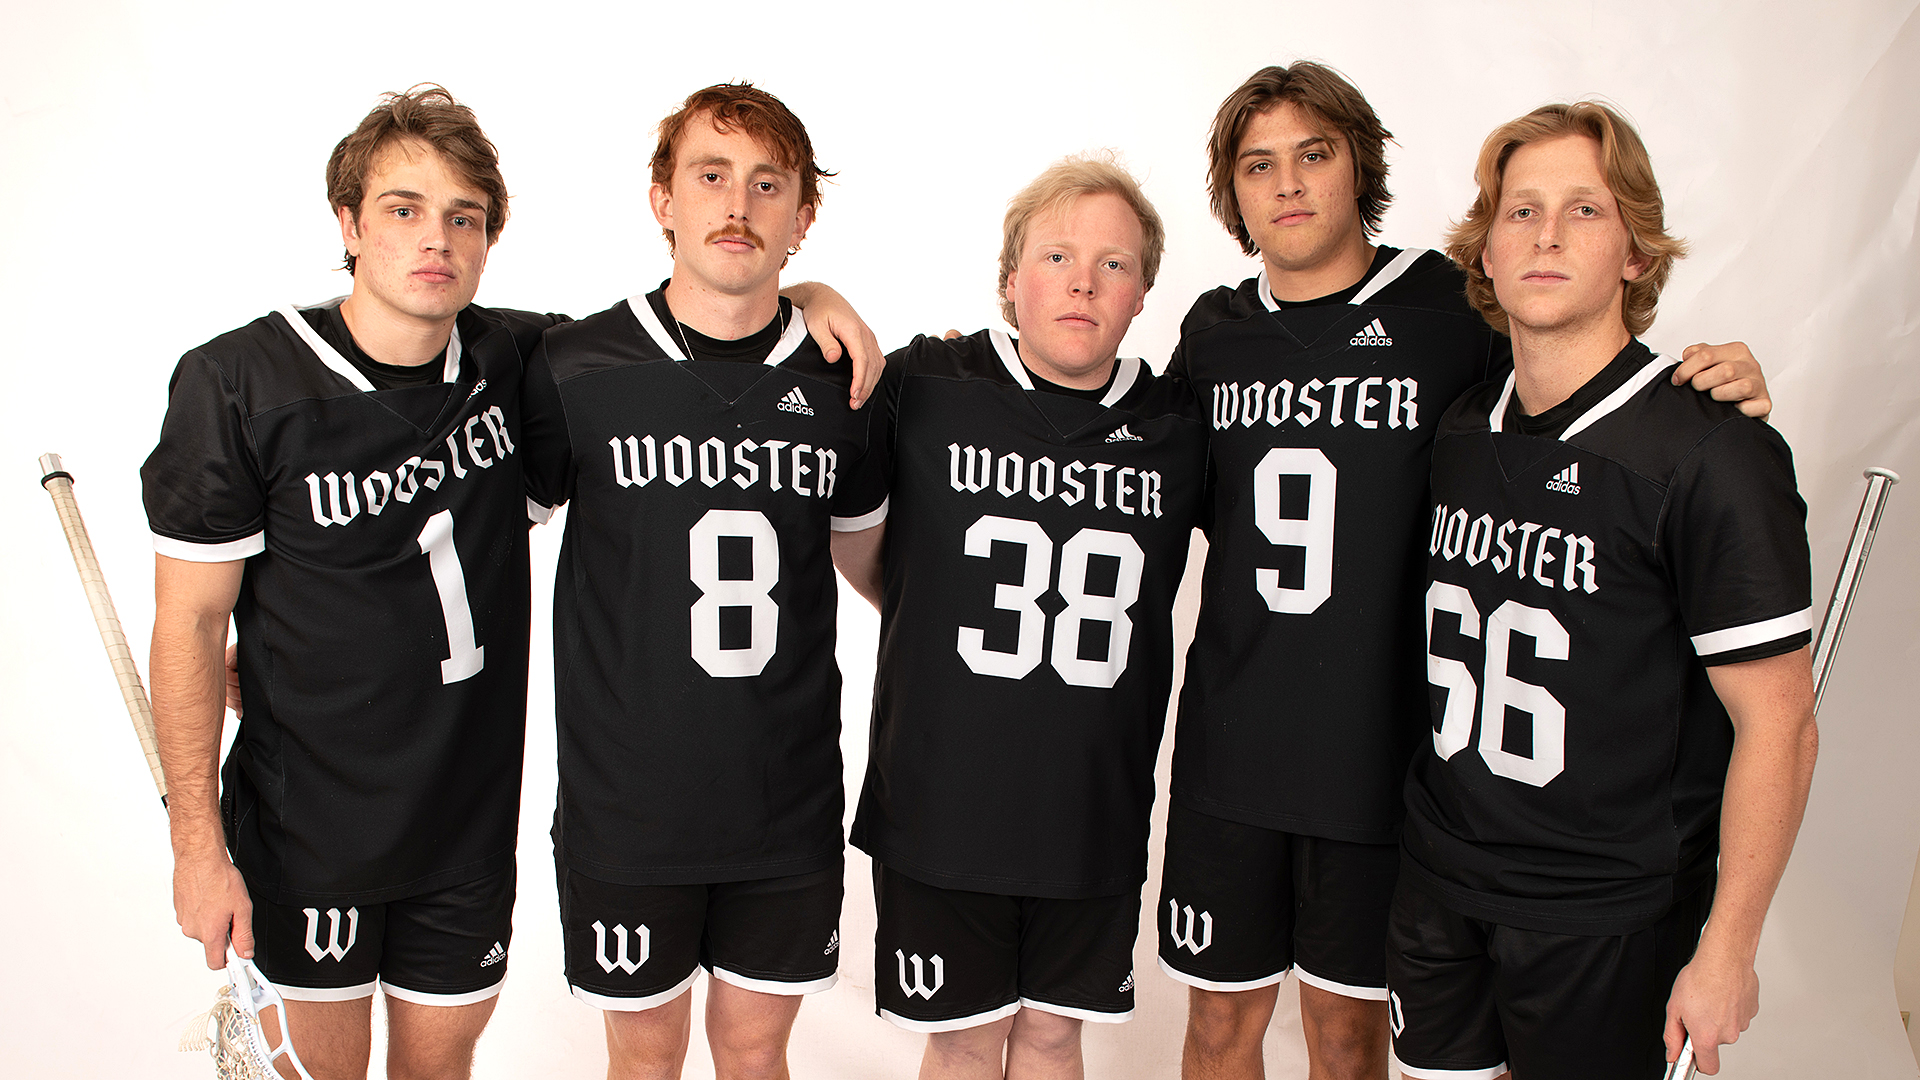 Wooster Men's Lacrosse Players